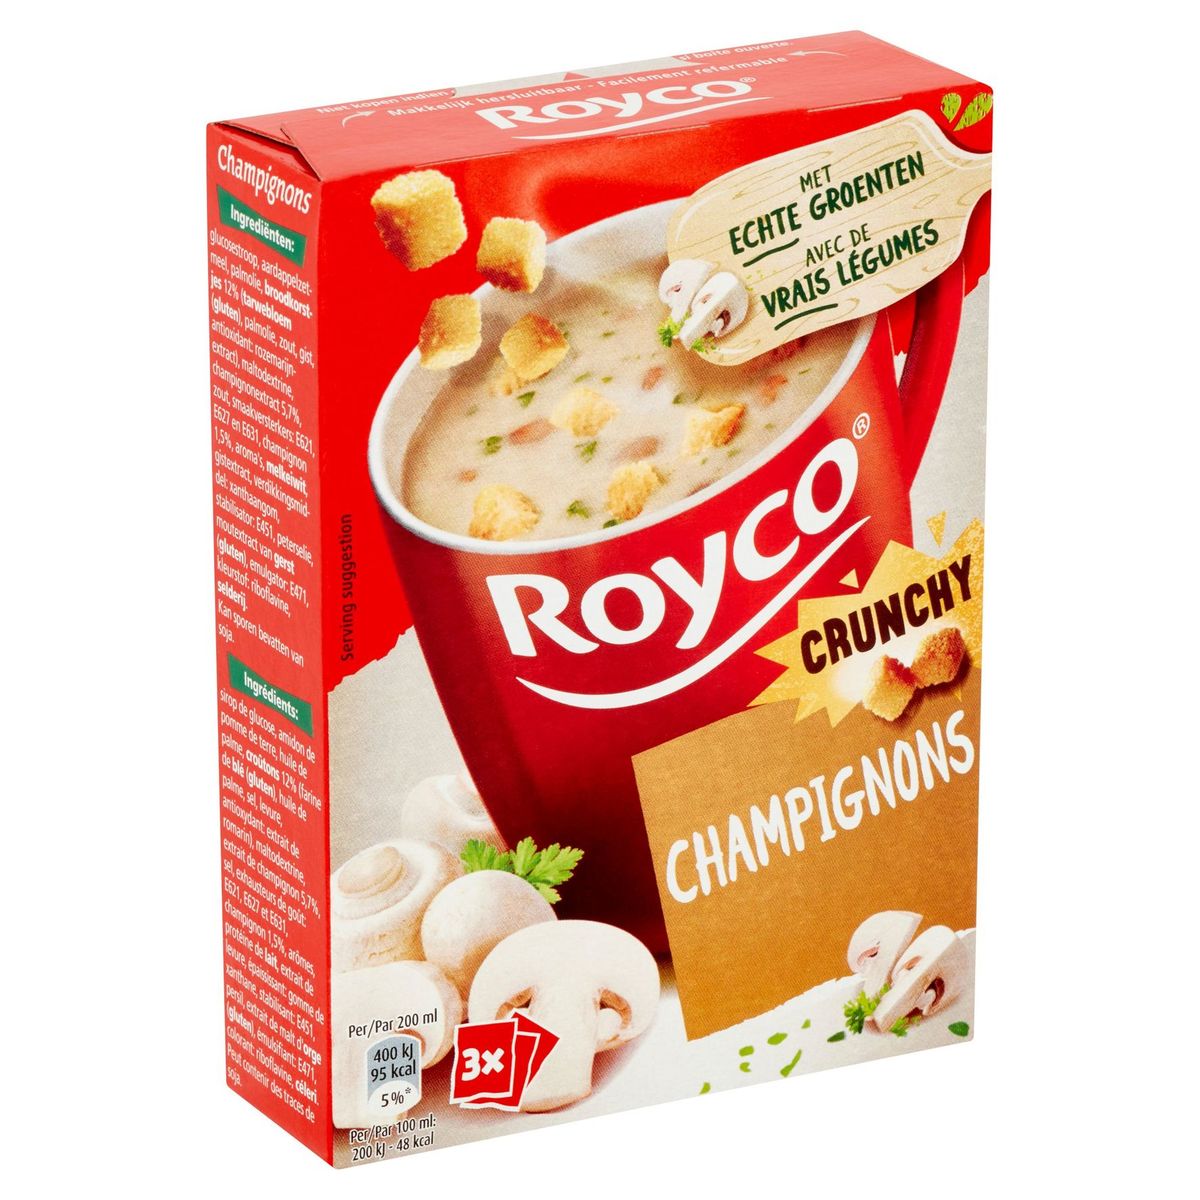 Royco Crunchy Champignons 3 x 18.9 g